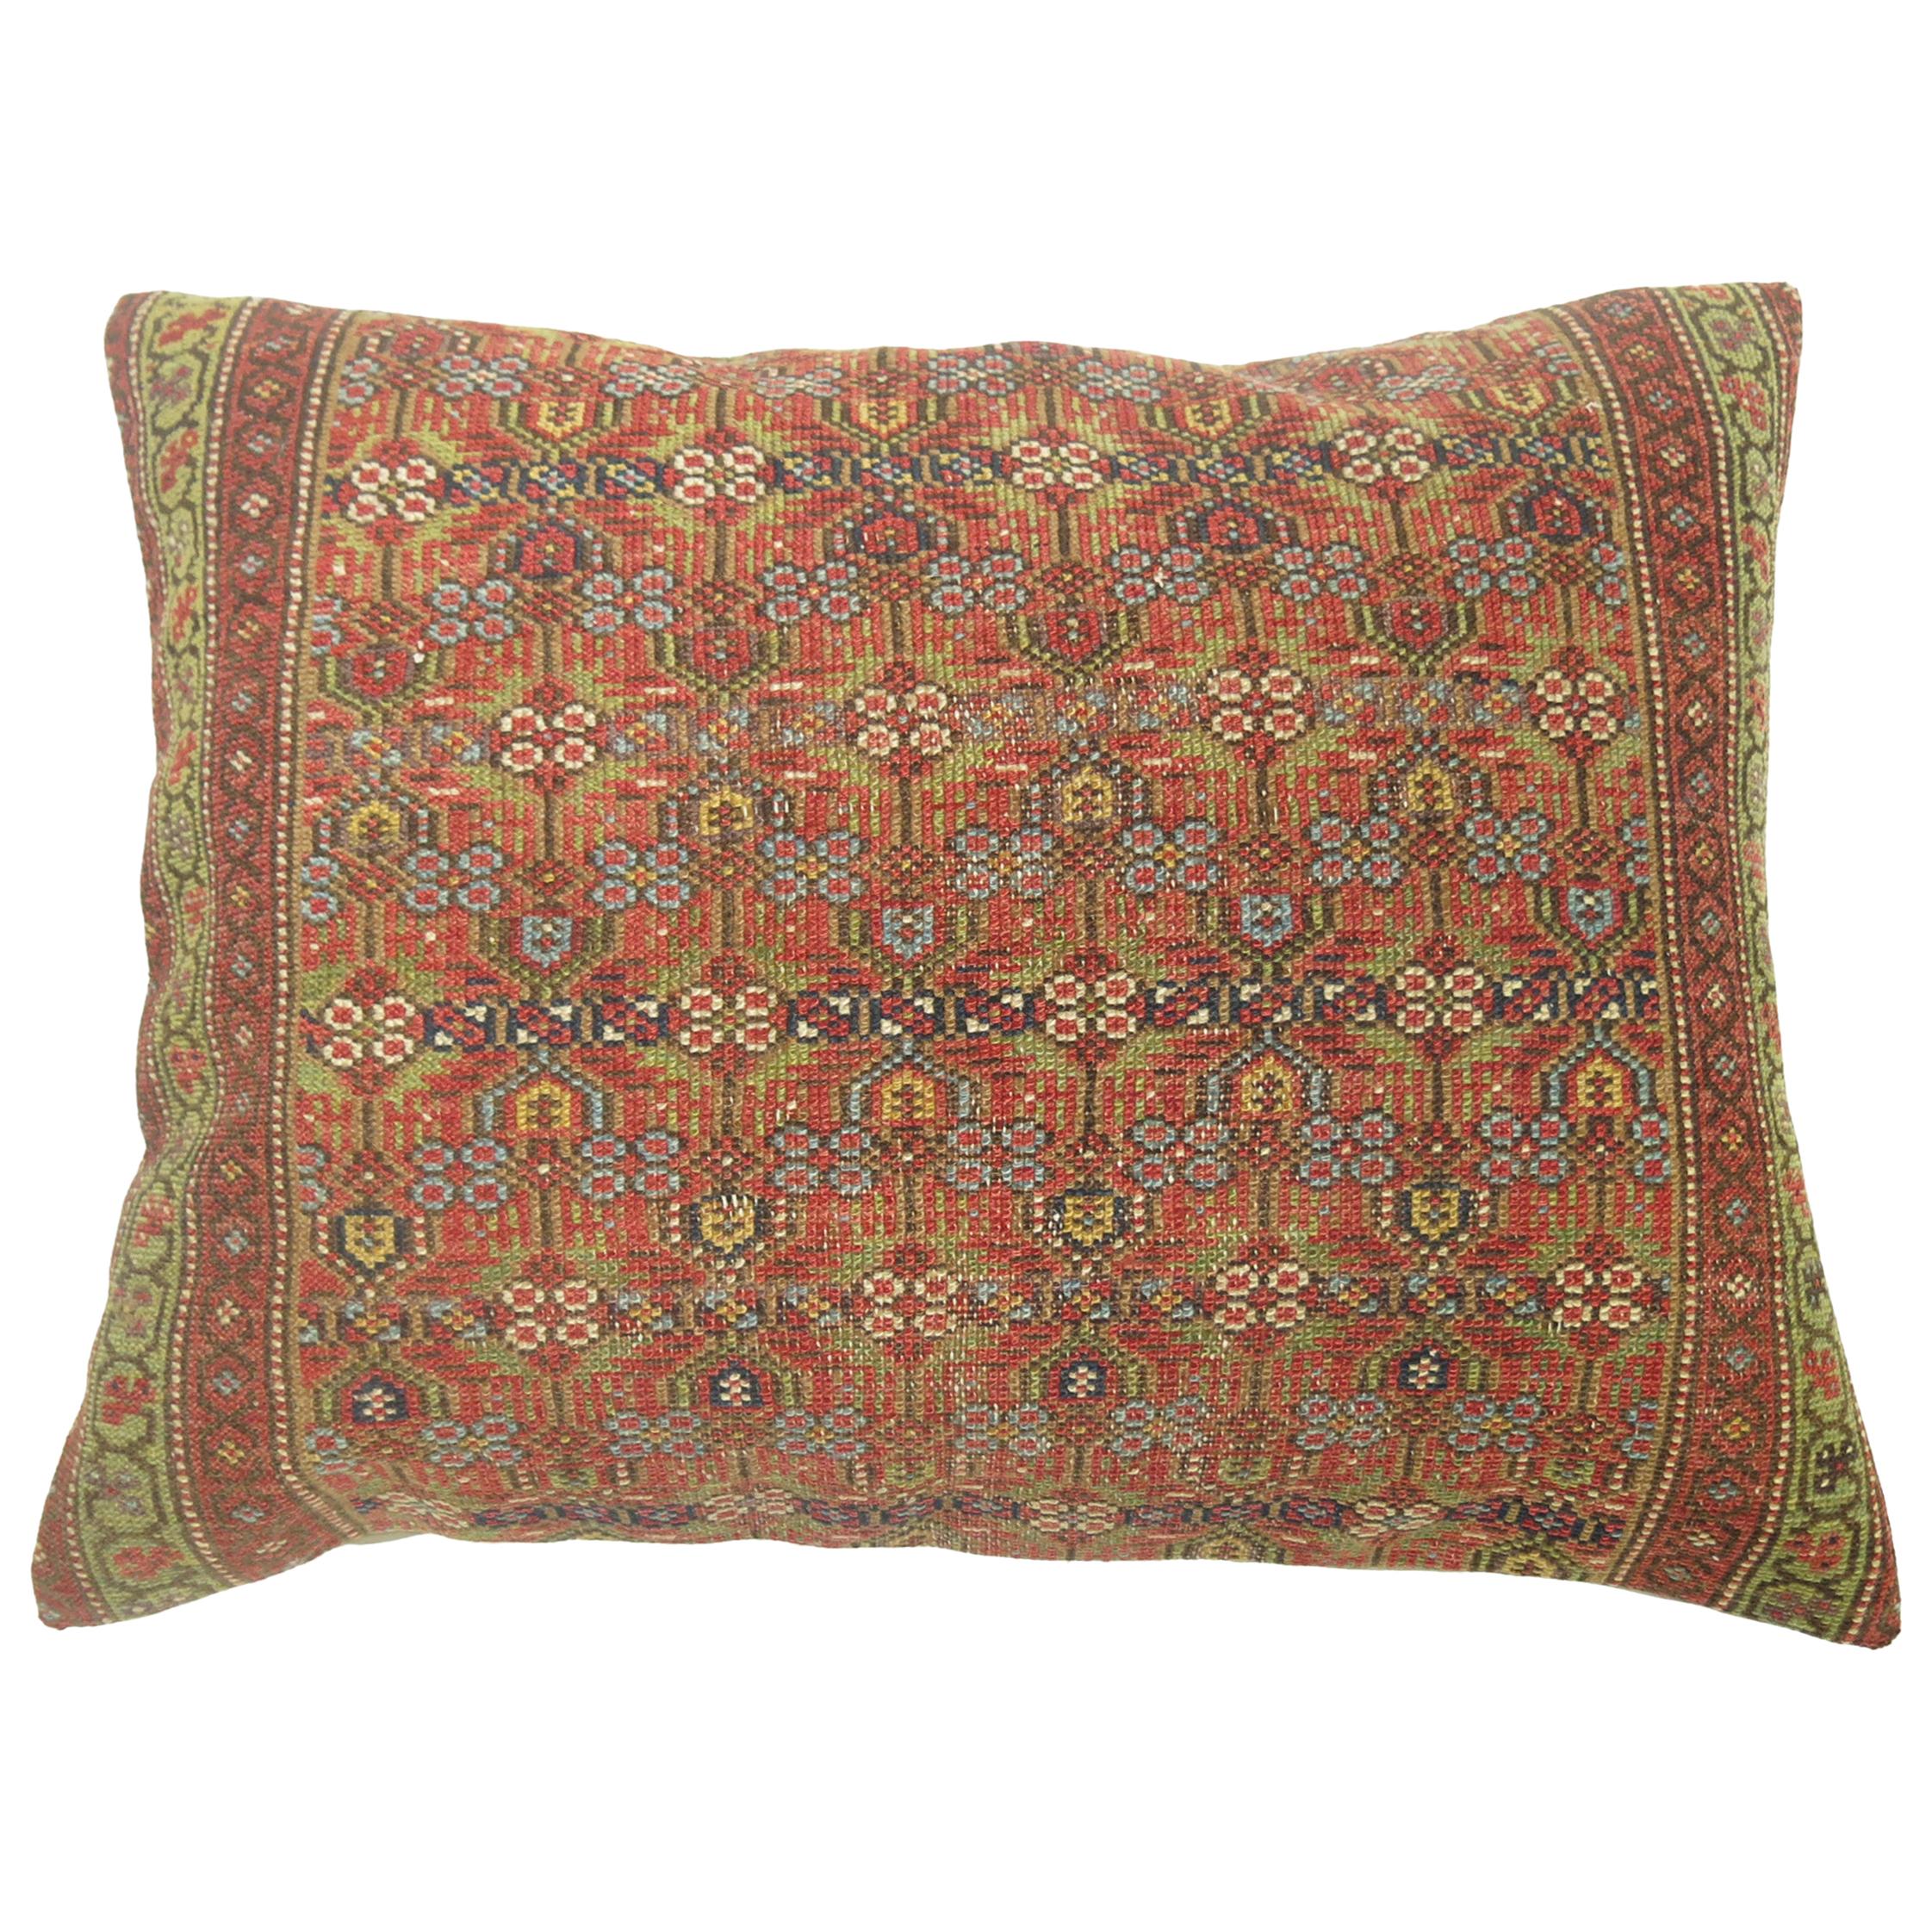 Tribal Antique Persian Floor Rug Pillow